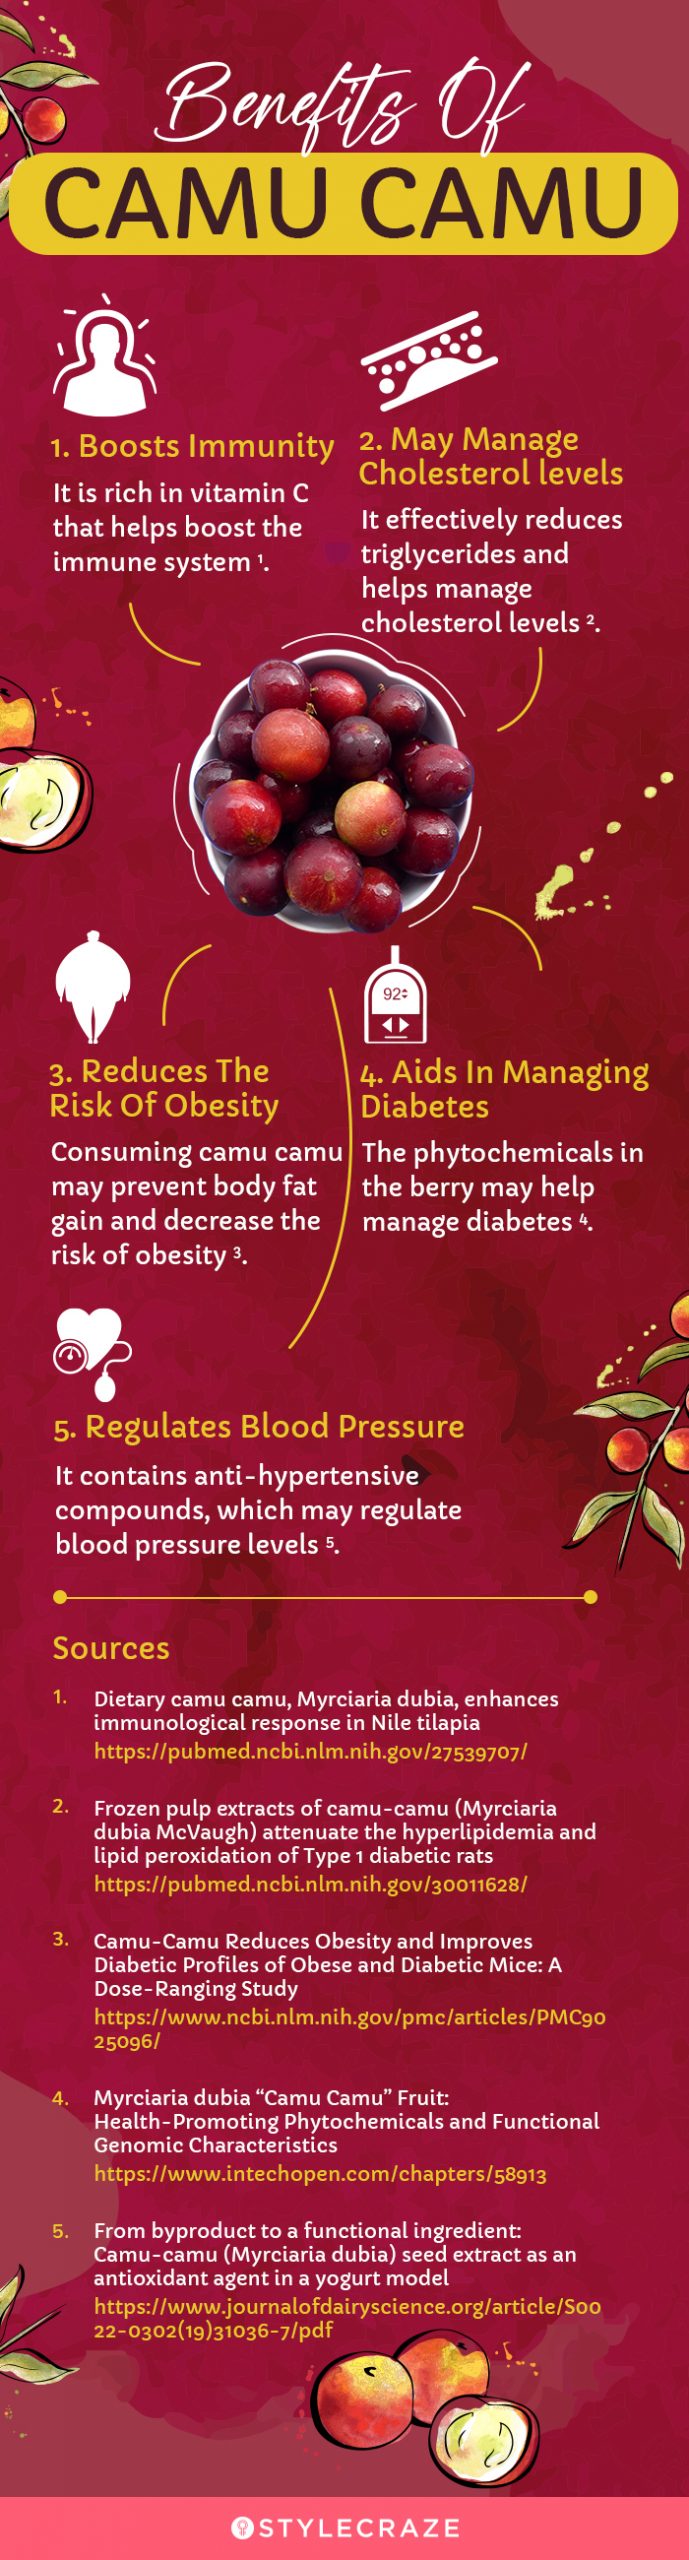 benefits of camu camu [infographic]